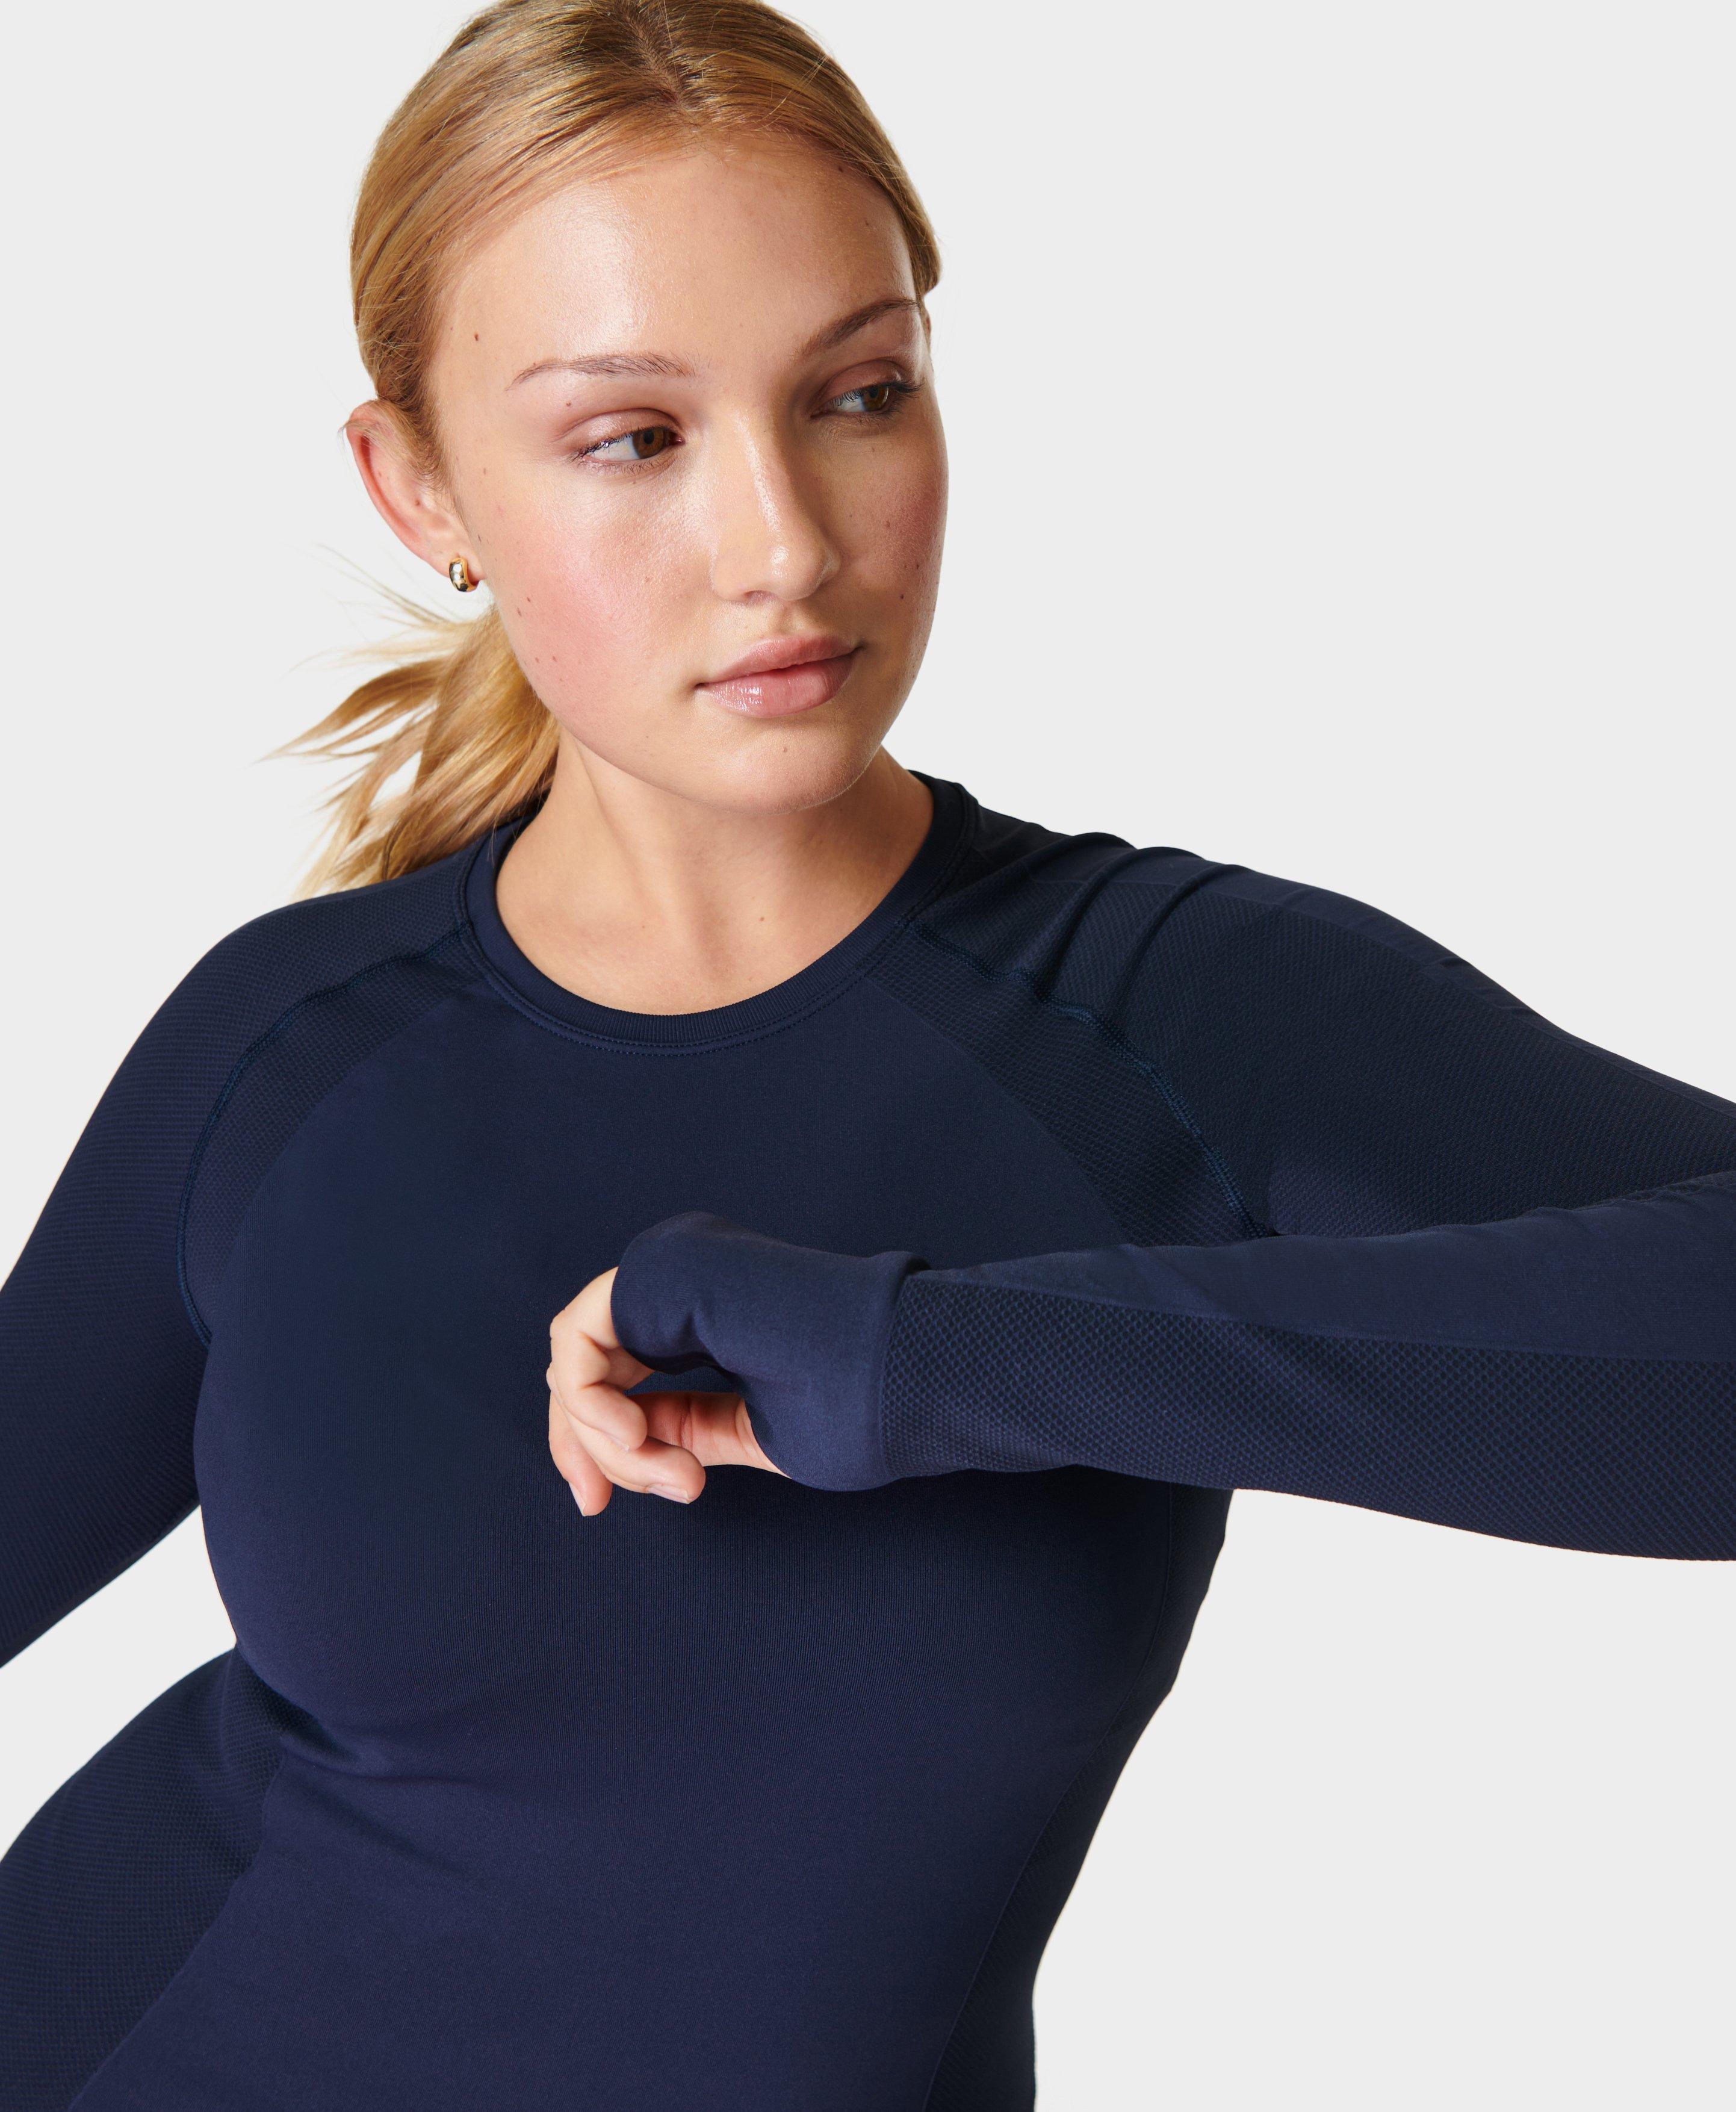 Wholesale Plus Size Sweat Suits for Women Sports Long Sleeve